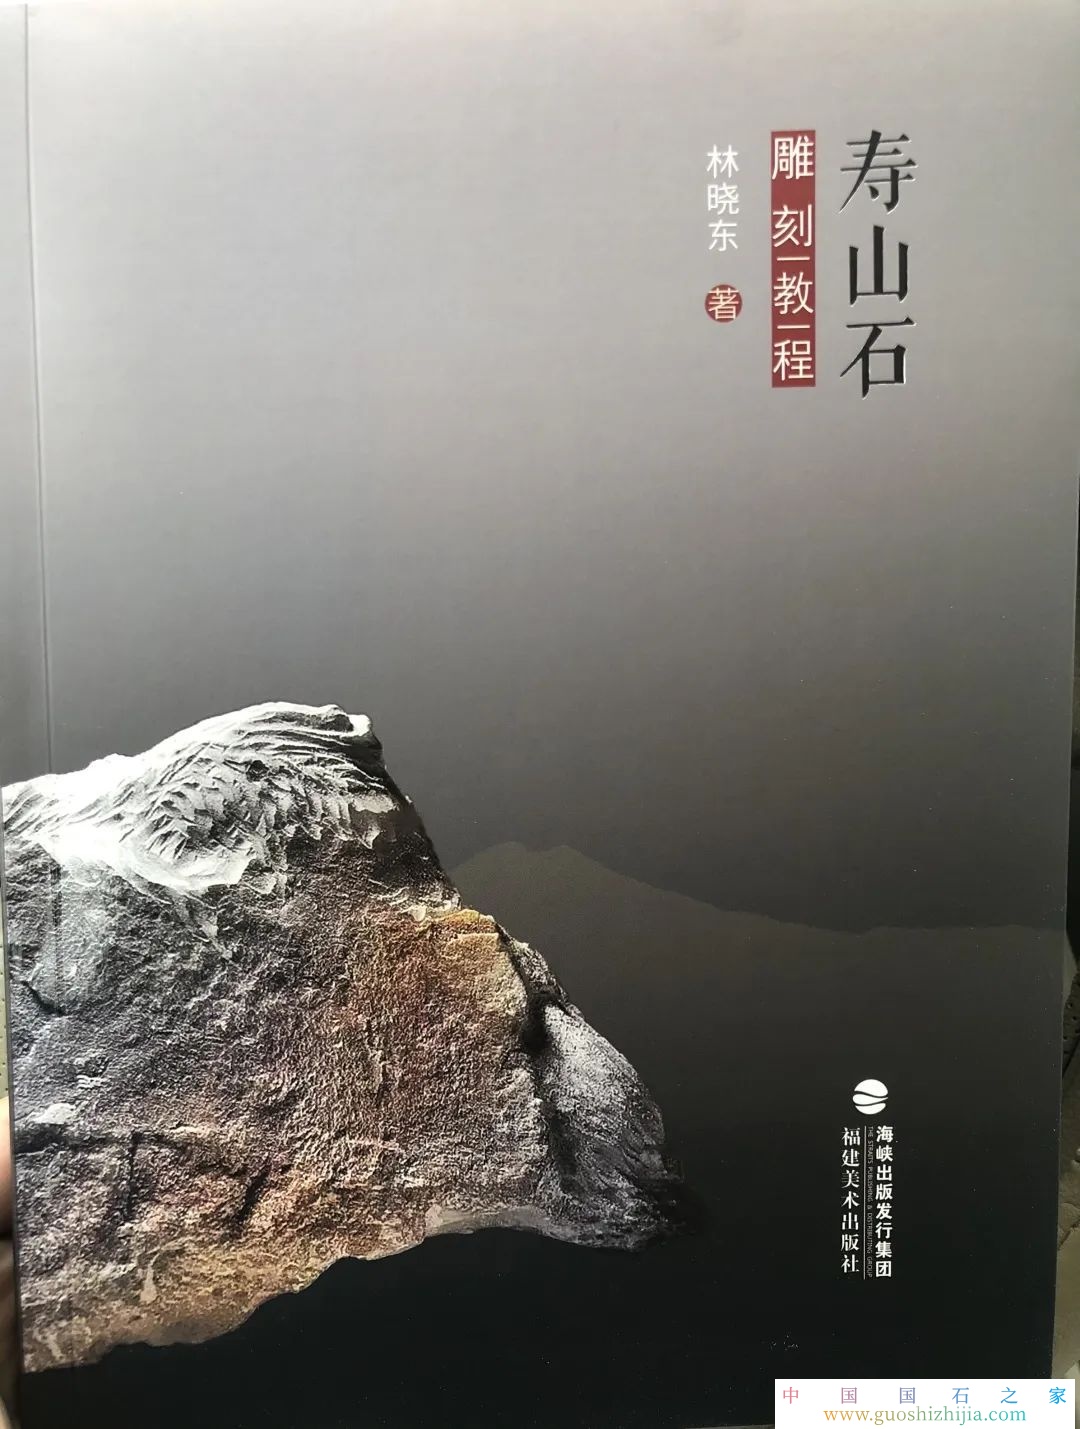 新书介绍｜《寿山石雕刻教程》正式出版1